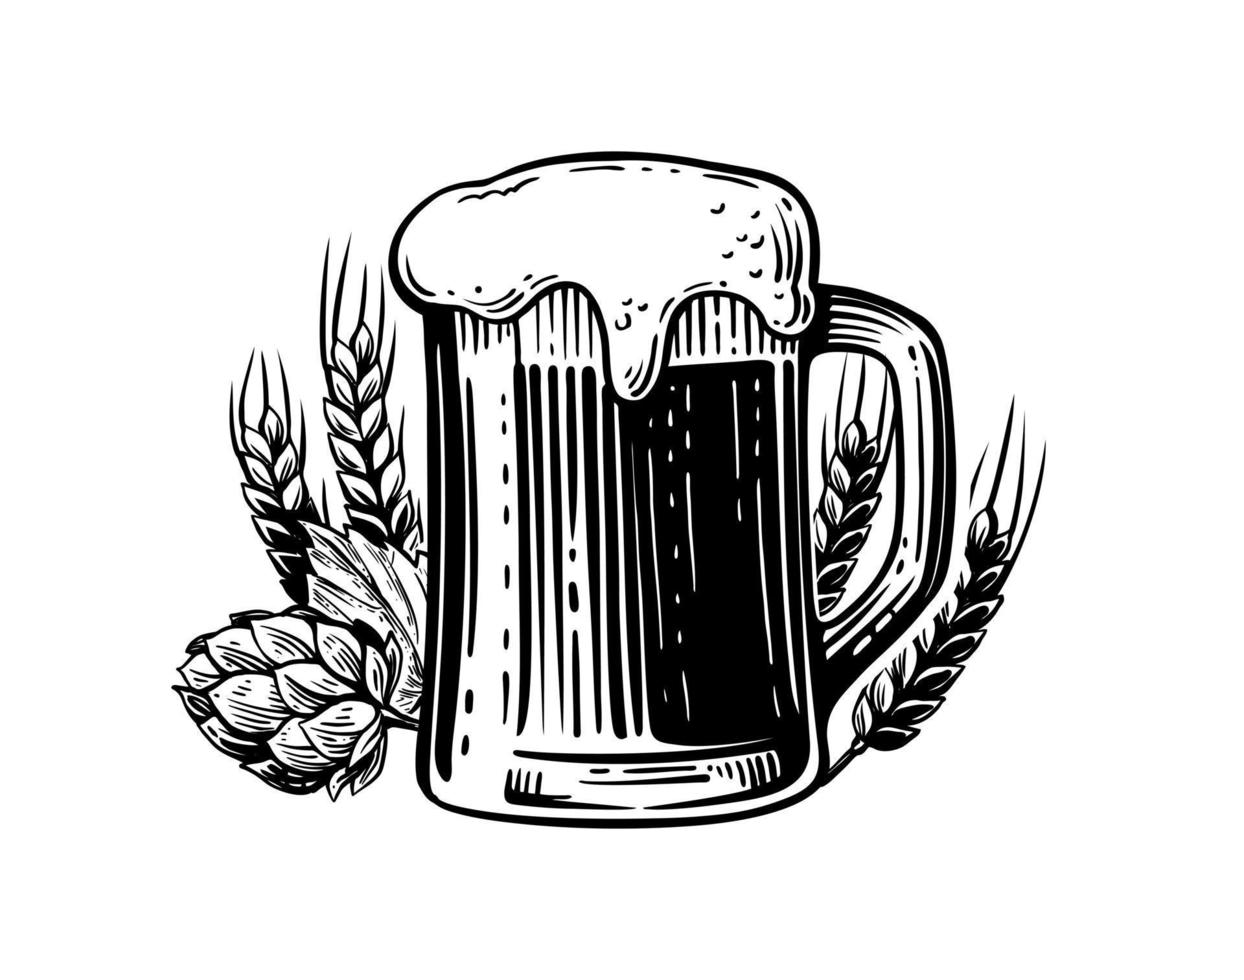 Beer mug vector sketch. Hops and wheat